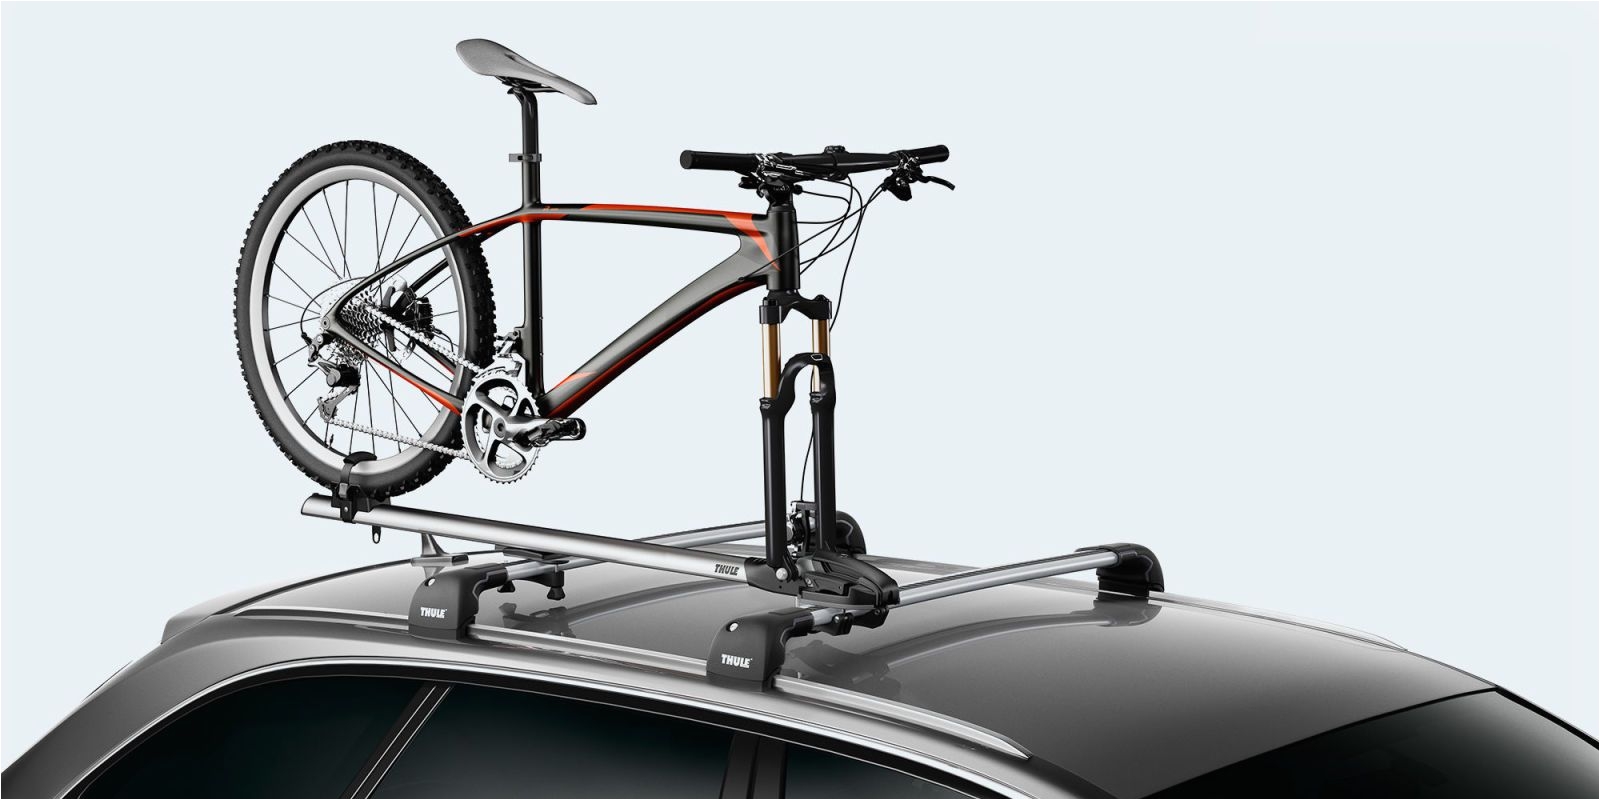 Honda Crv Bike Rack Hitch top 5 Best Bike Rack for Suv Reviews and Guide Stuff to Buy